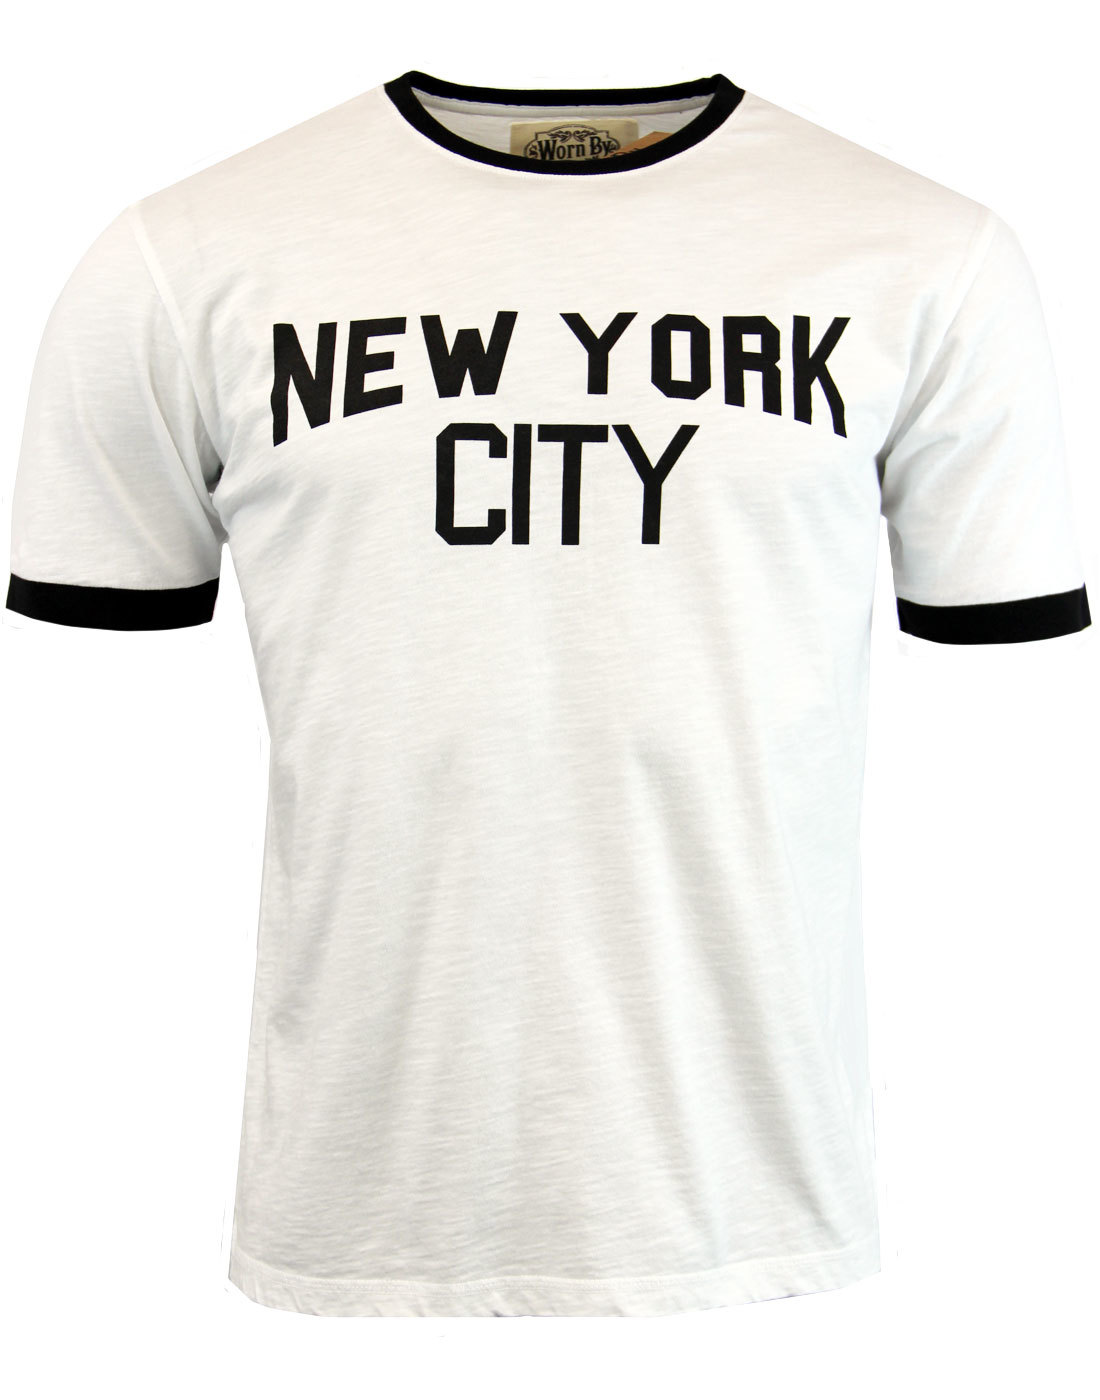 WORN BY New York City Retro Vintage John Lennon 70s T-Shirt